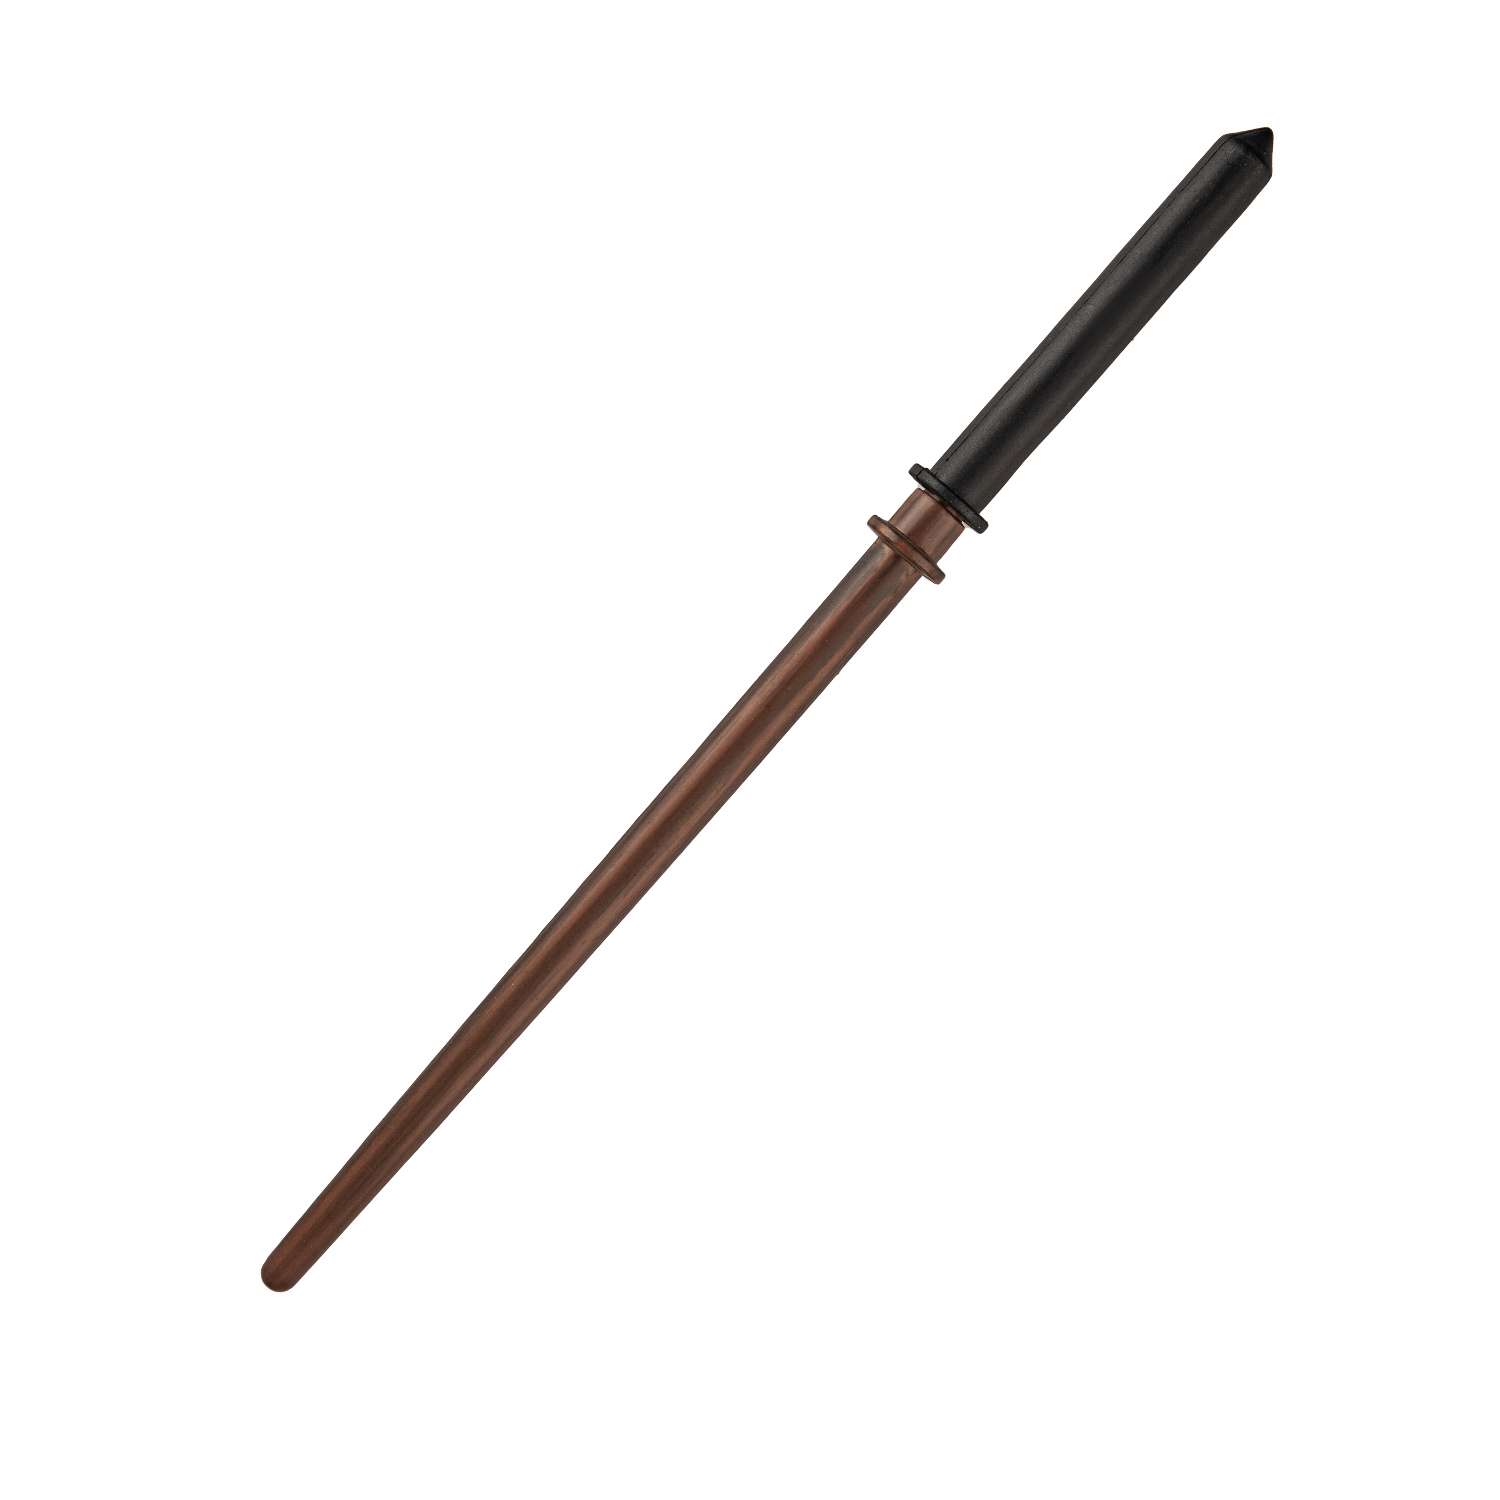 Ручка Harry Potter в виде палочки Драко Малфоя 25 см с подставкой и закладкой - фото 5